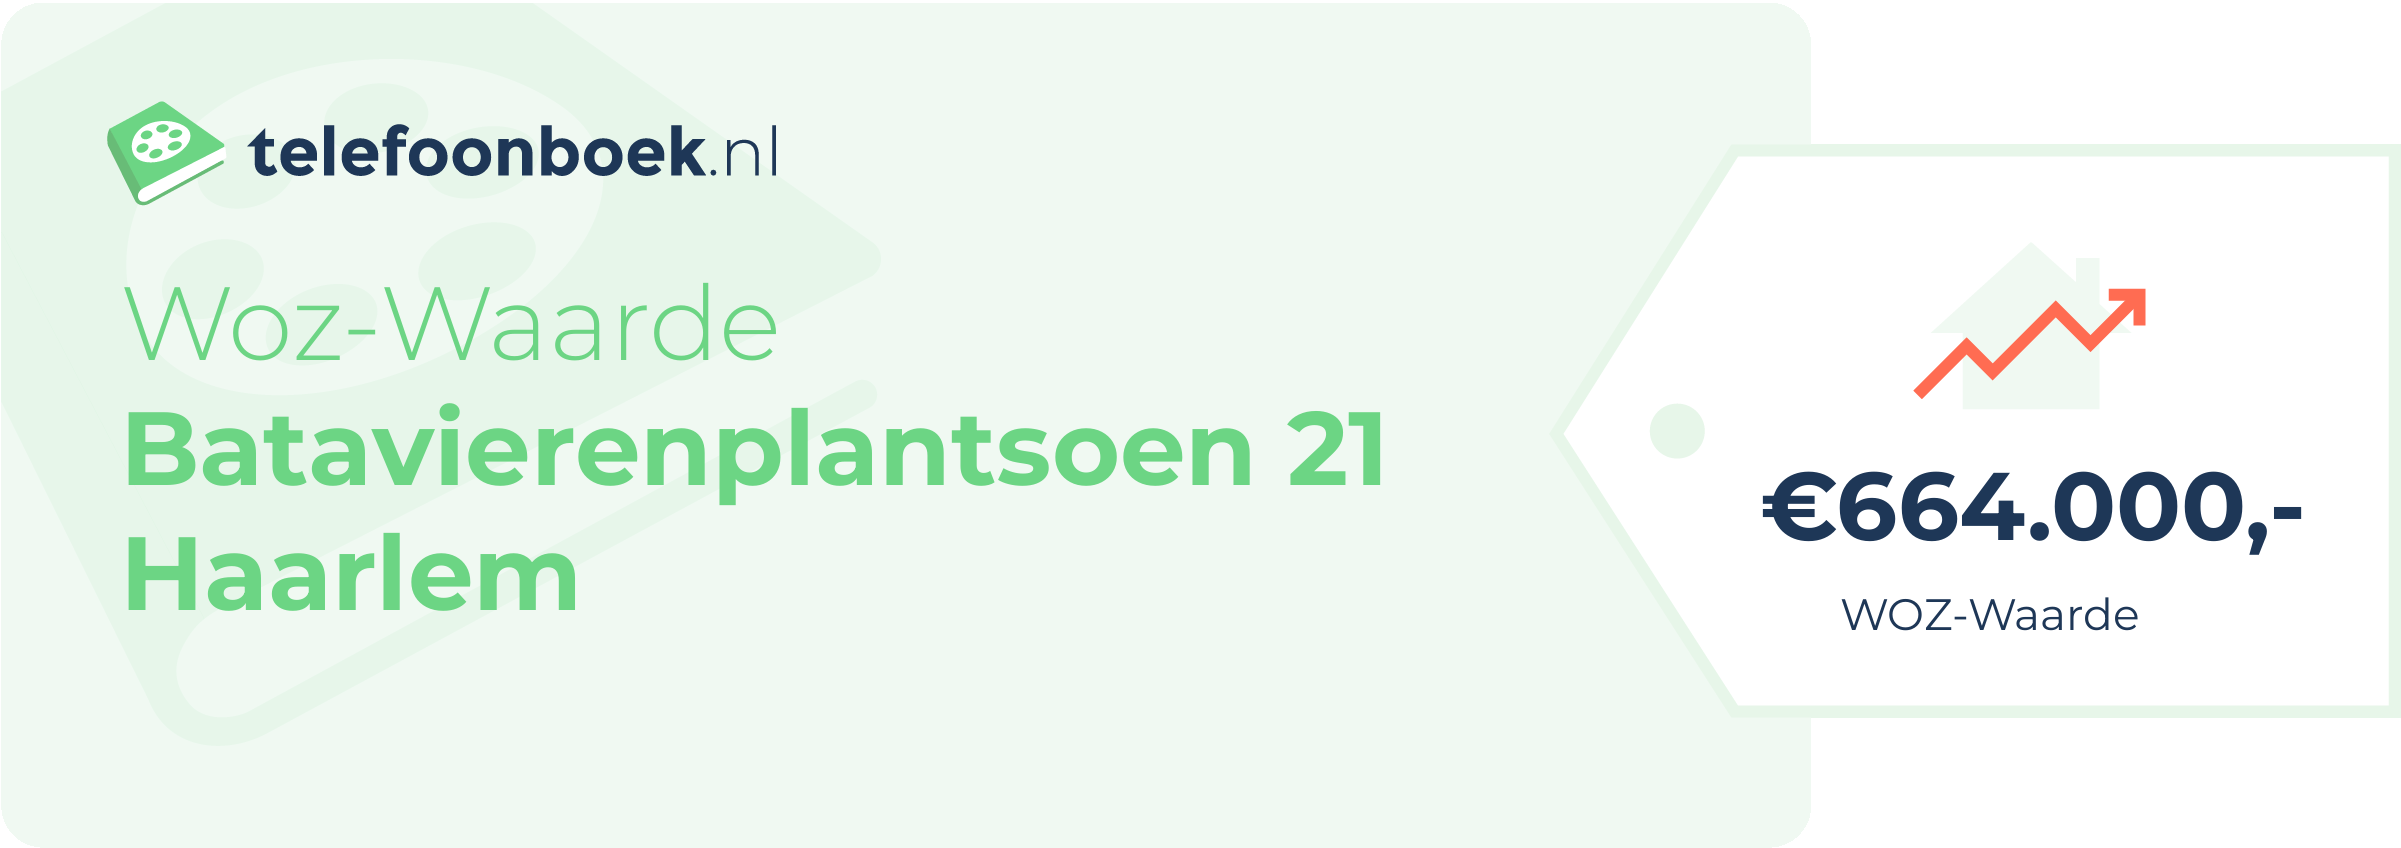 WOZ-waarde Batavierenplantsoen 21 Haarlem